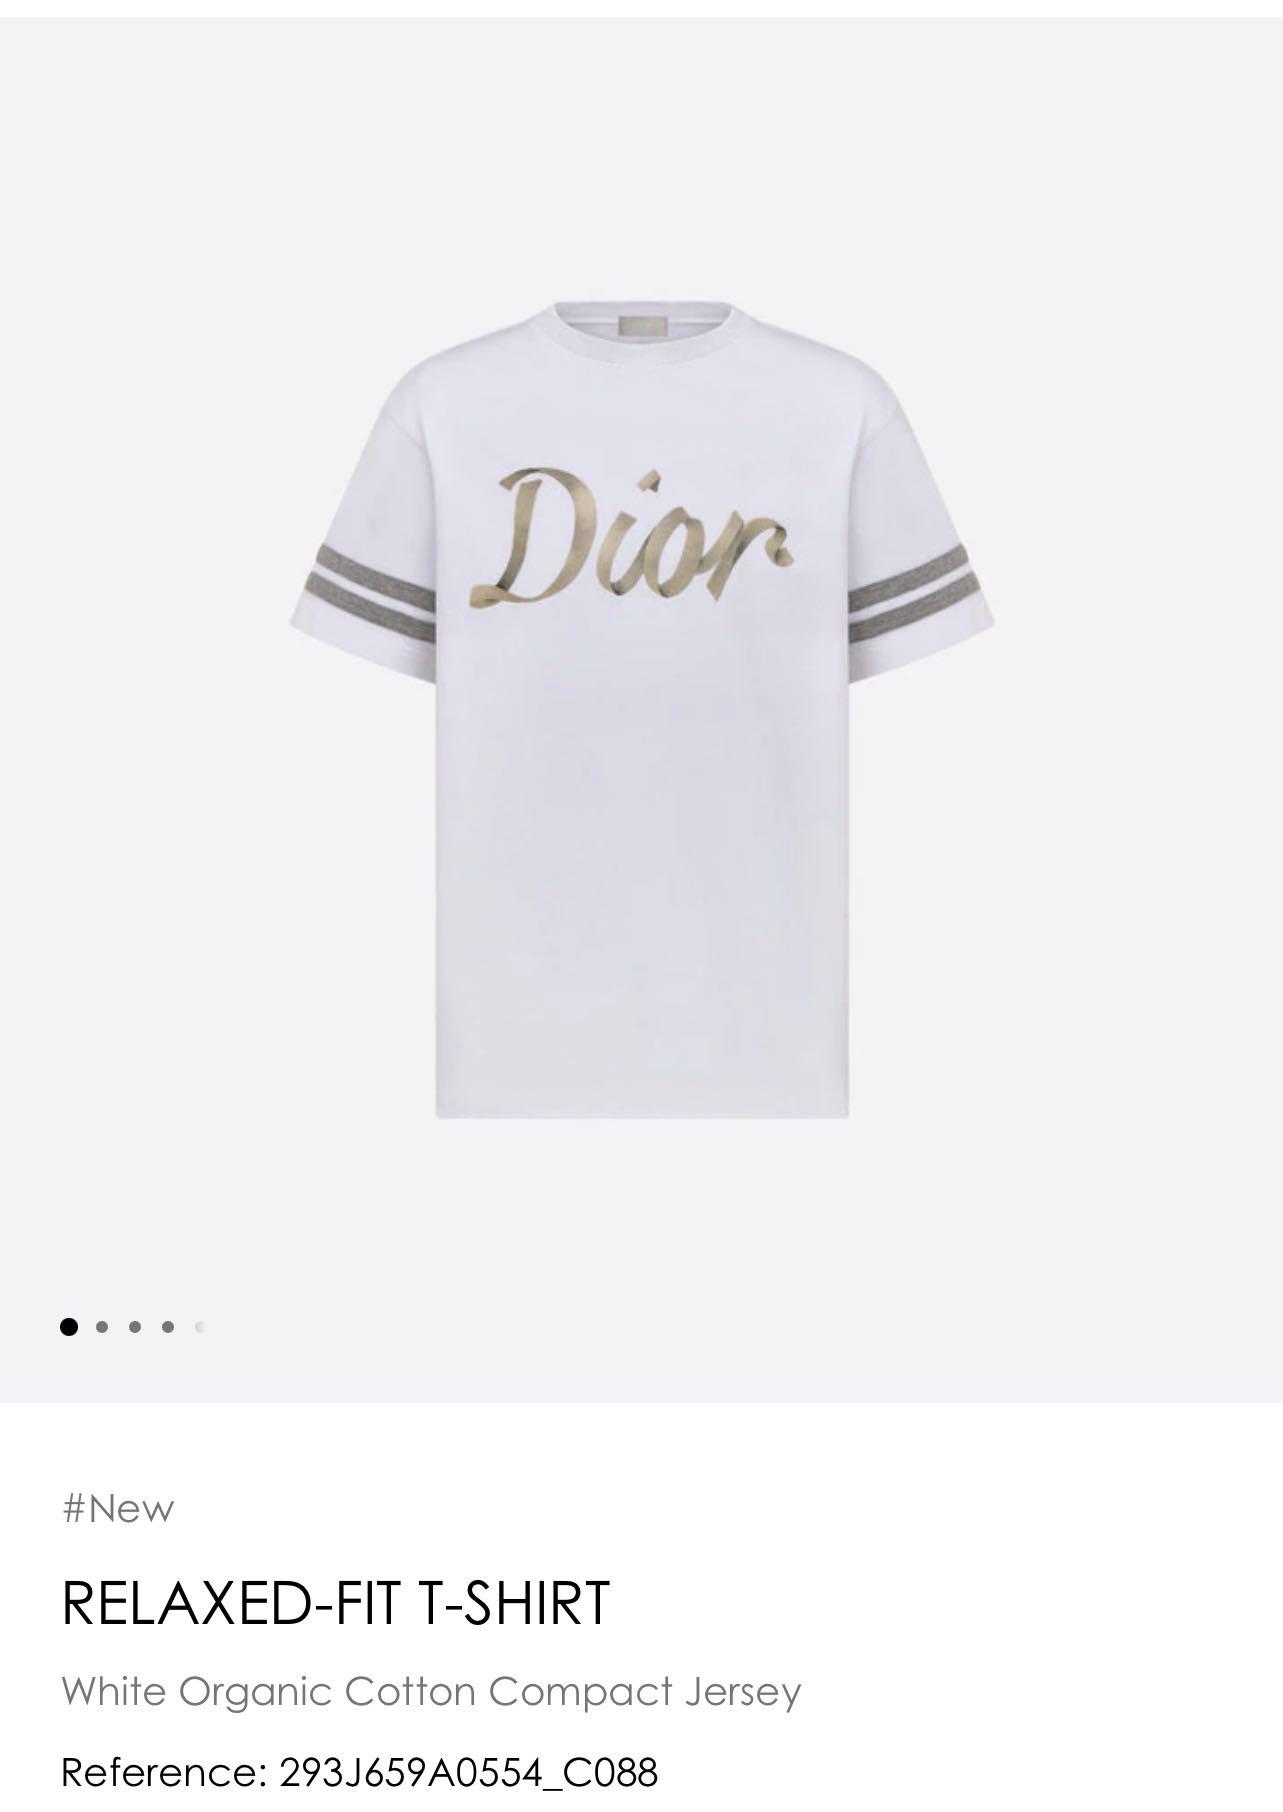 Dior - CD Diamond Relaxed-Fit T-Shirt White Organic Cotton Jersey - Size XL - Men